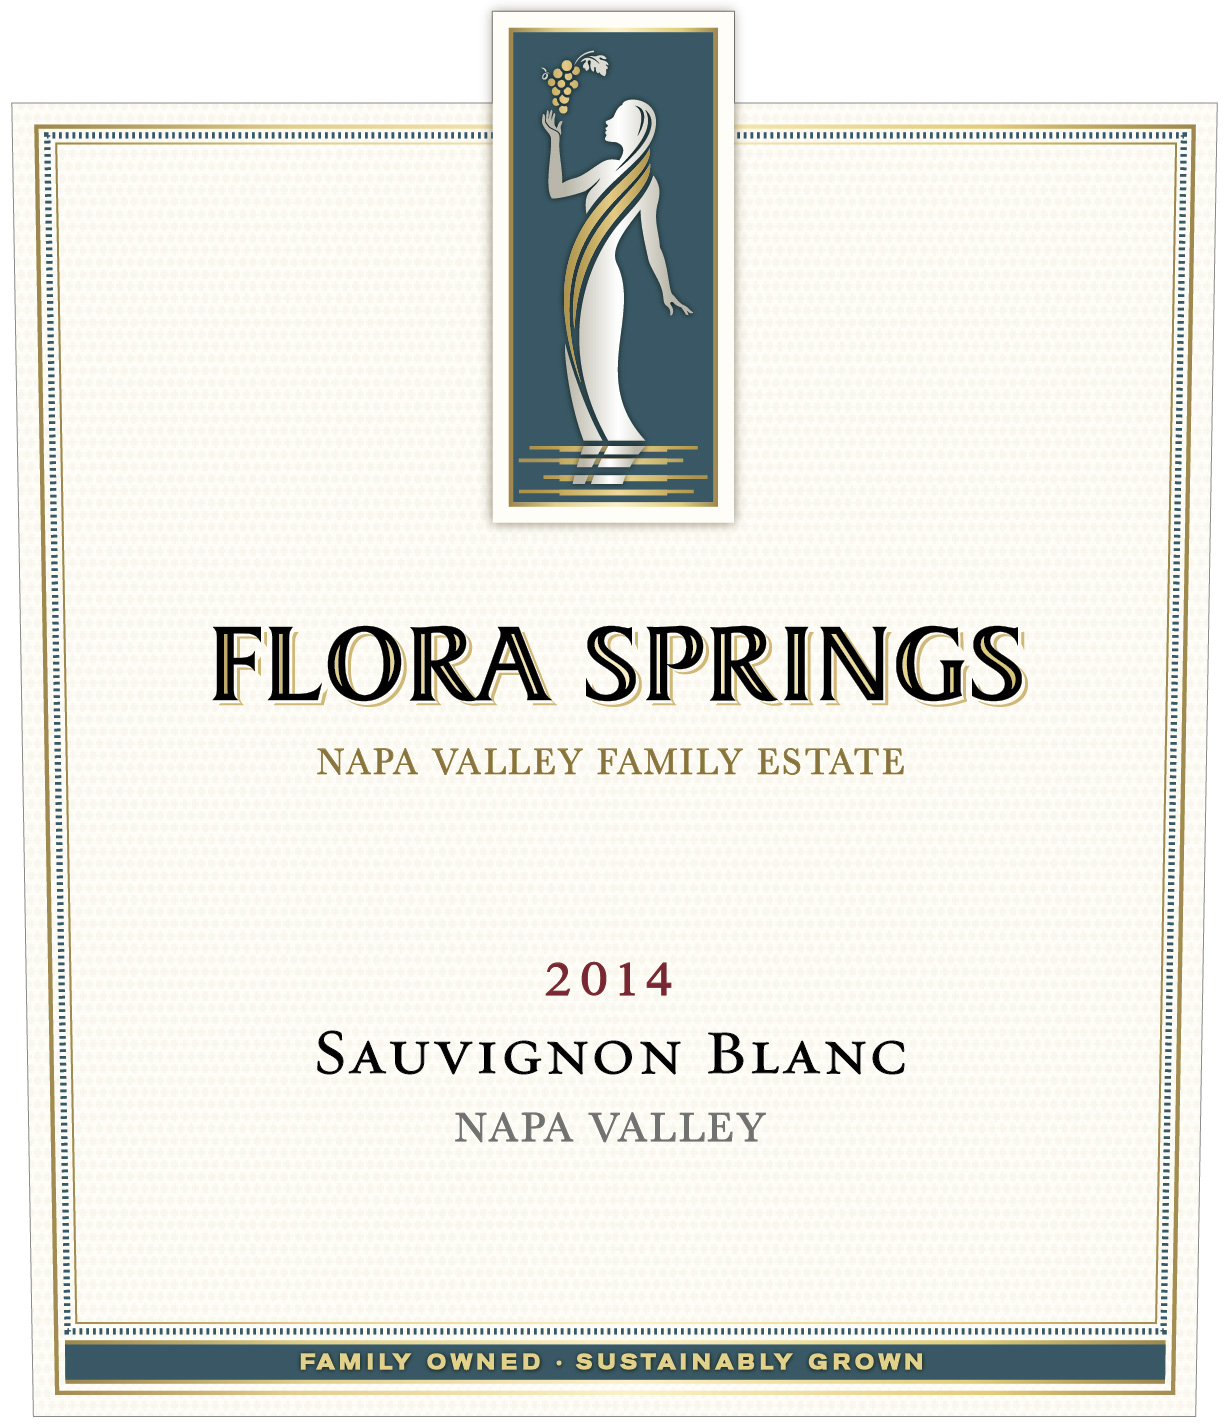 2013 Flora Springs Sauvignon Blanc Napa - click image for full description